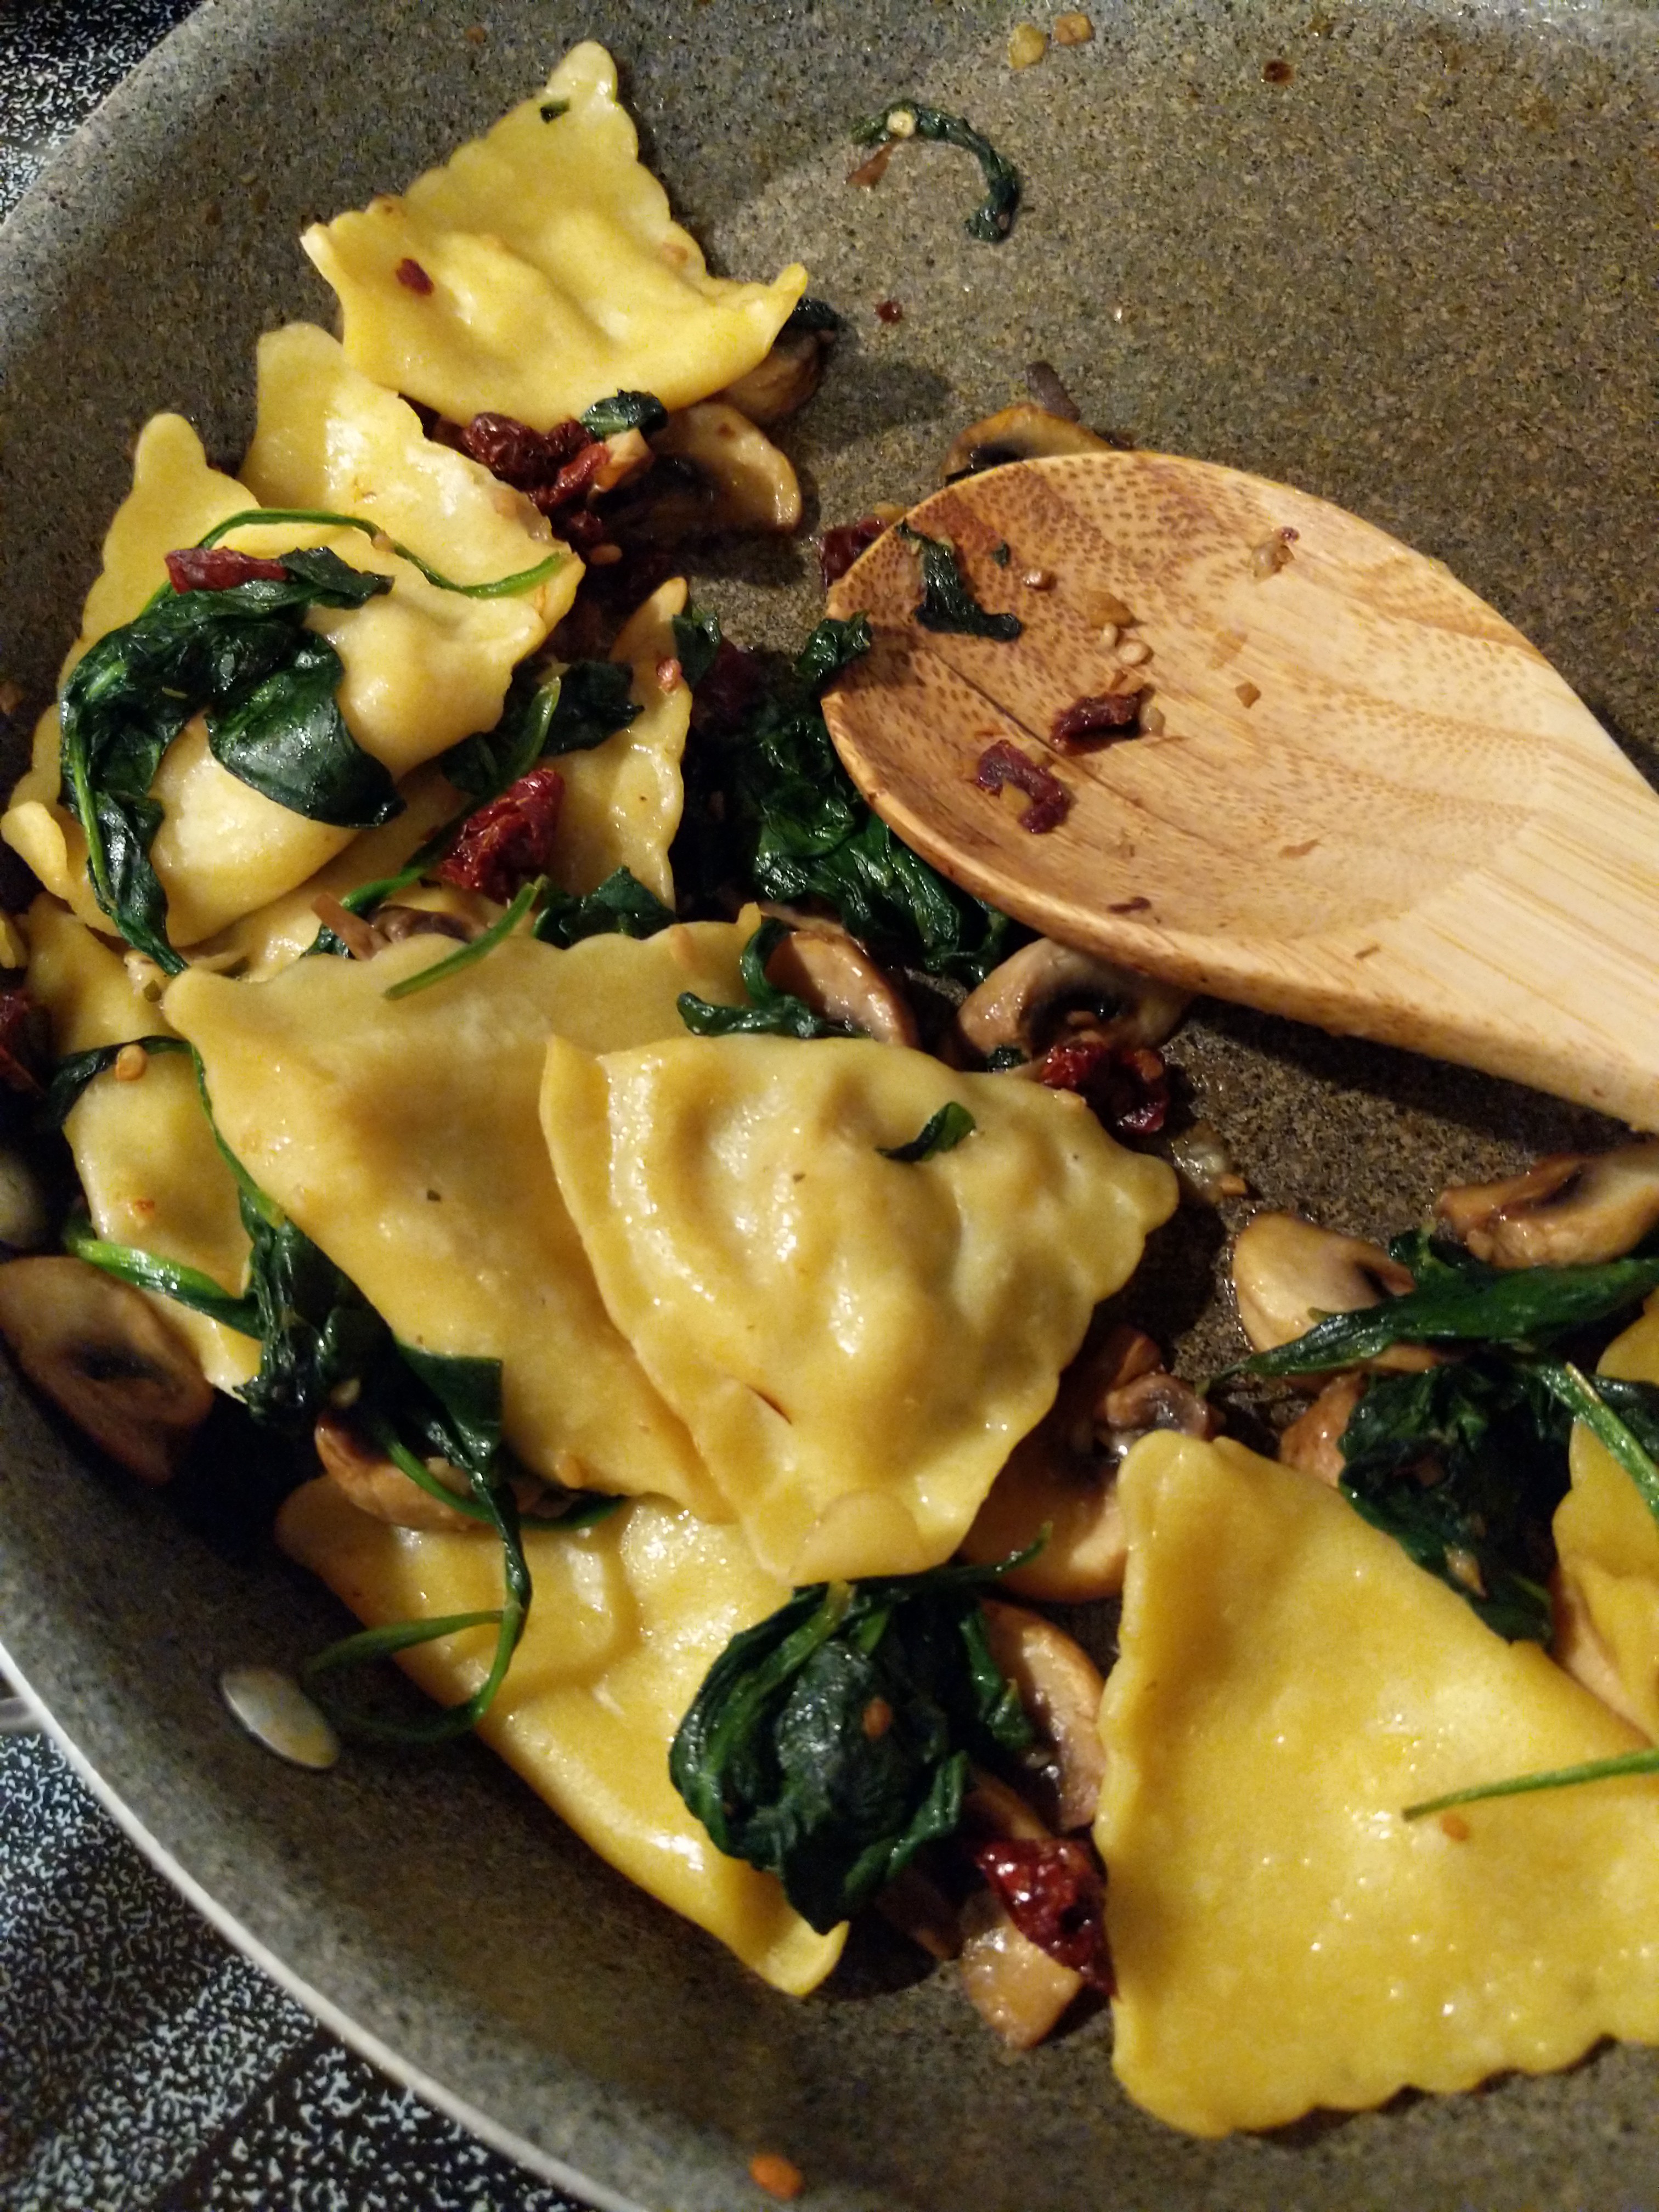 Mushroom Ravioli with Spinach | Jodie G | Copy Me That